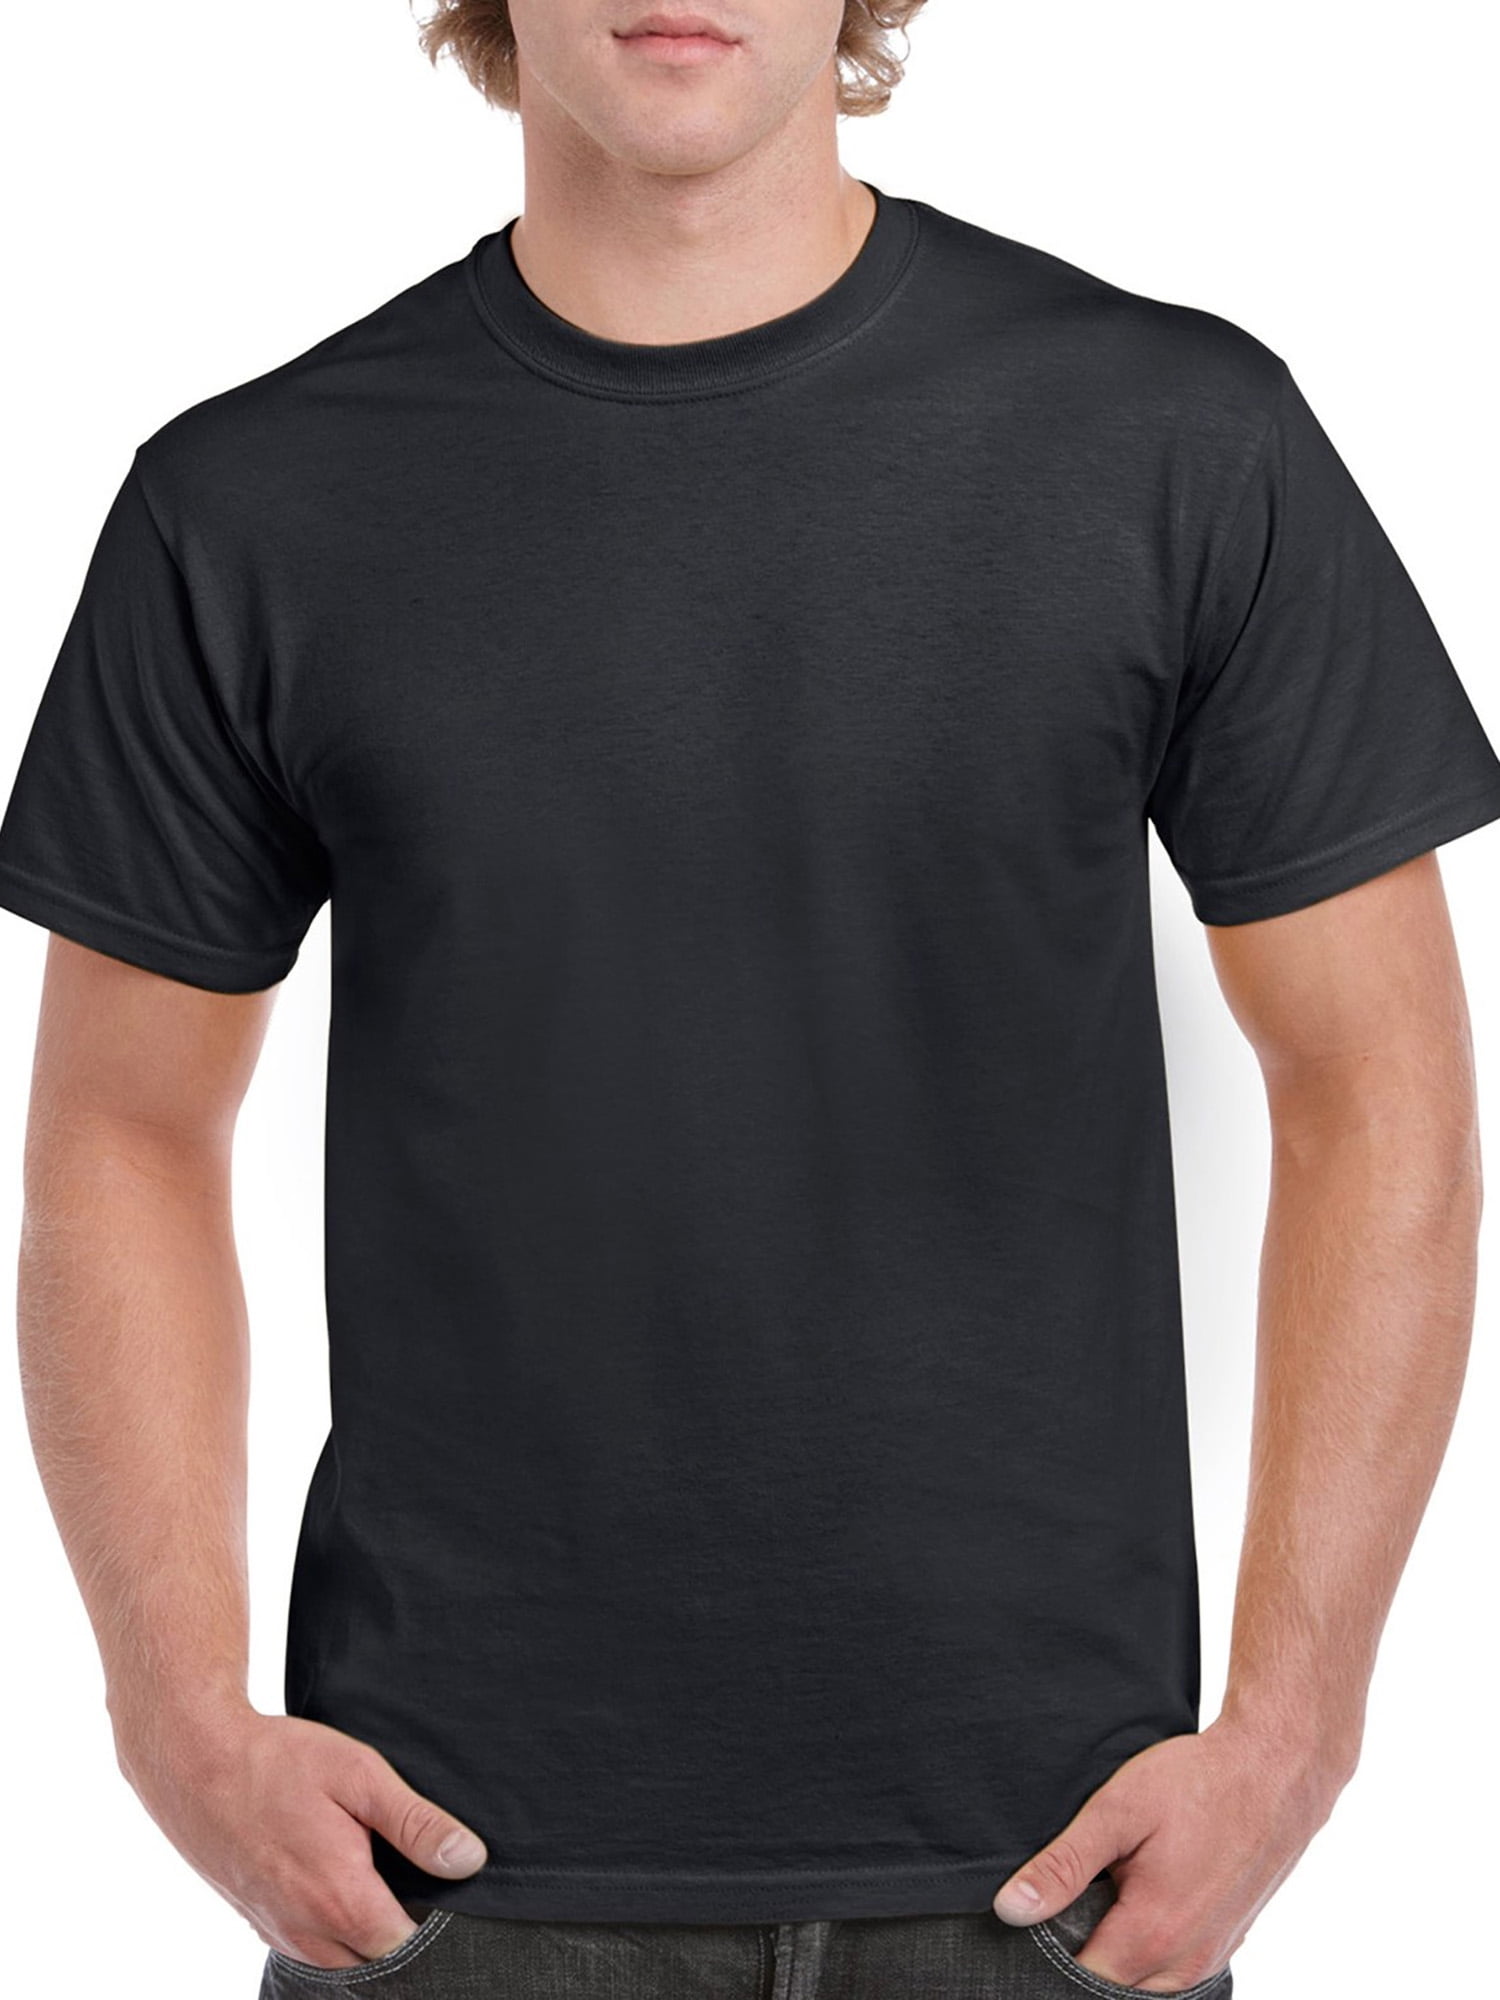 Gildan Cotton Crew Short Sleeve T-Shirt, Small, Adult, 1 Each